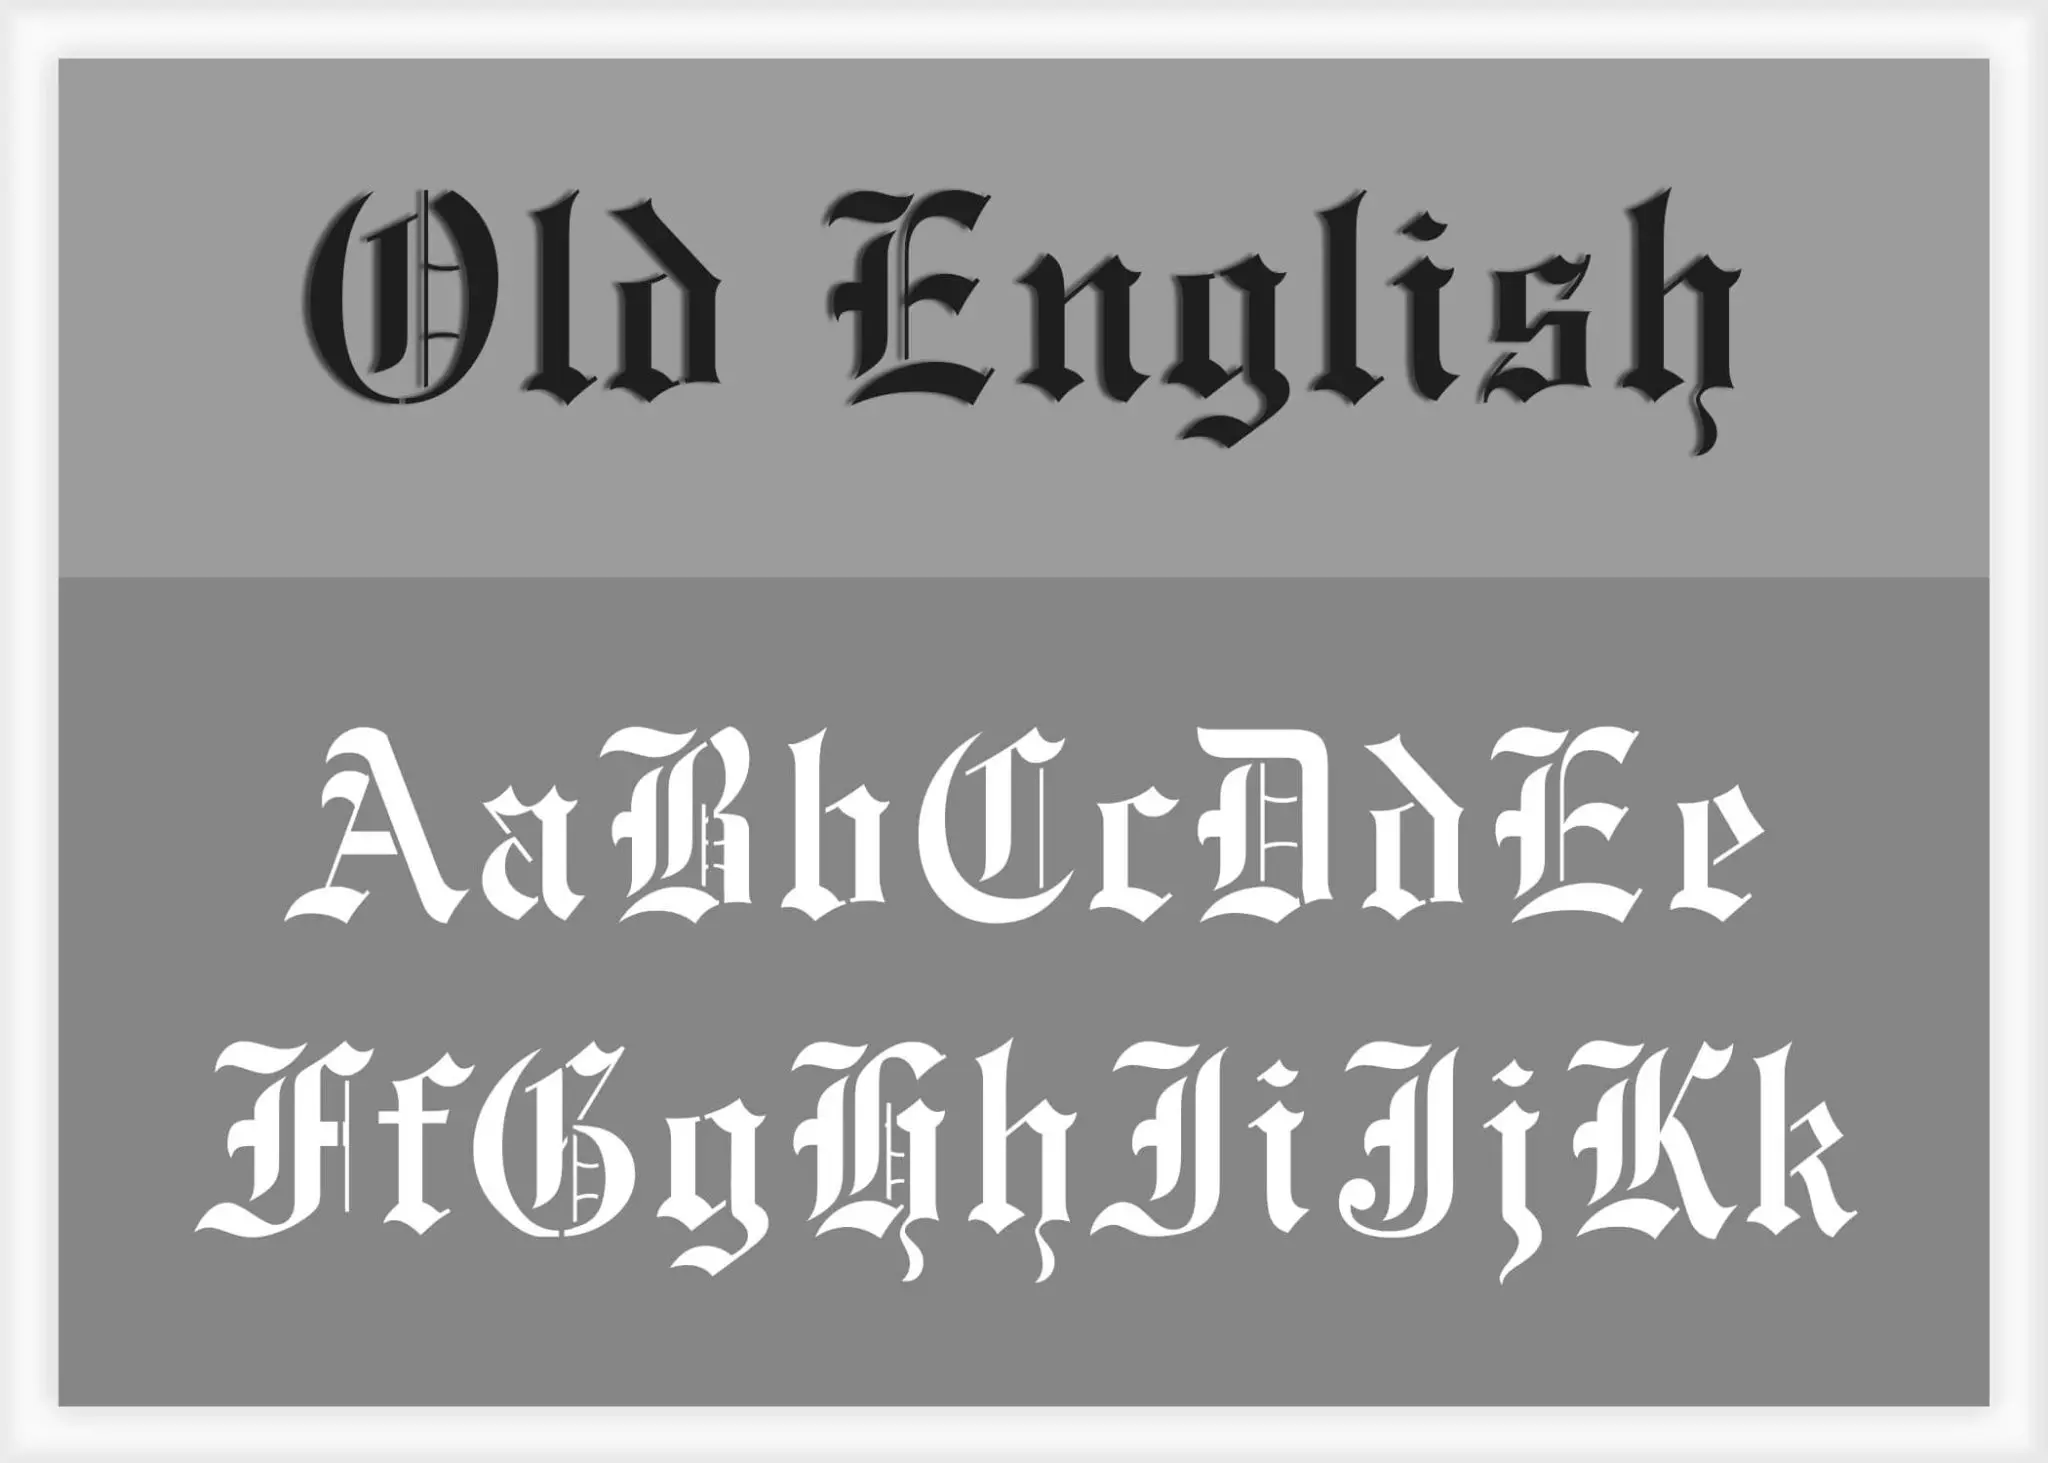 old english font letter d illuminated manuscript